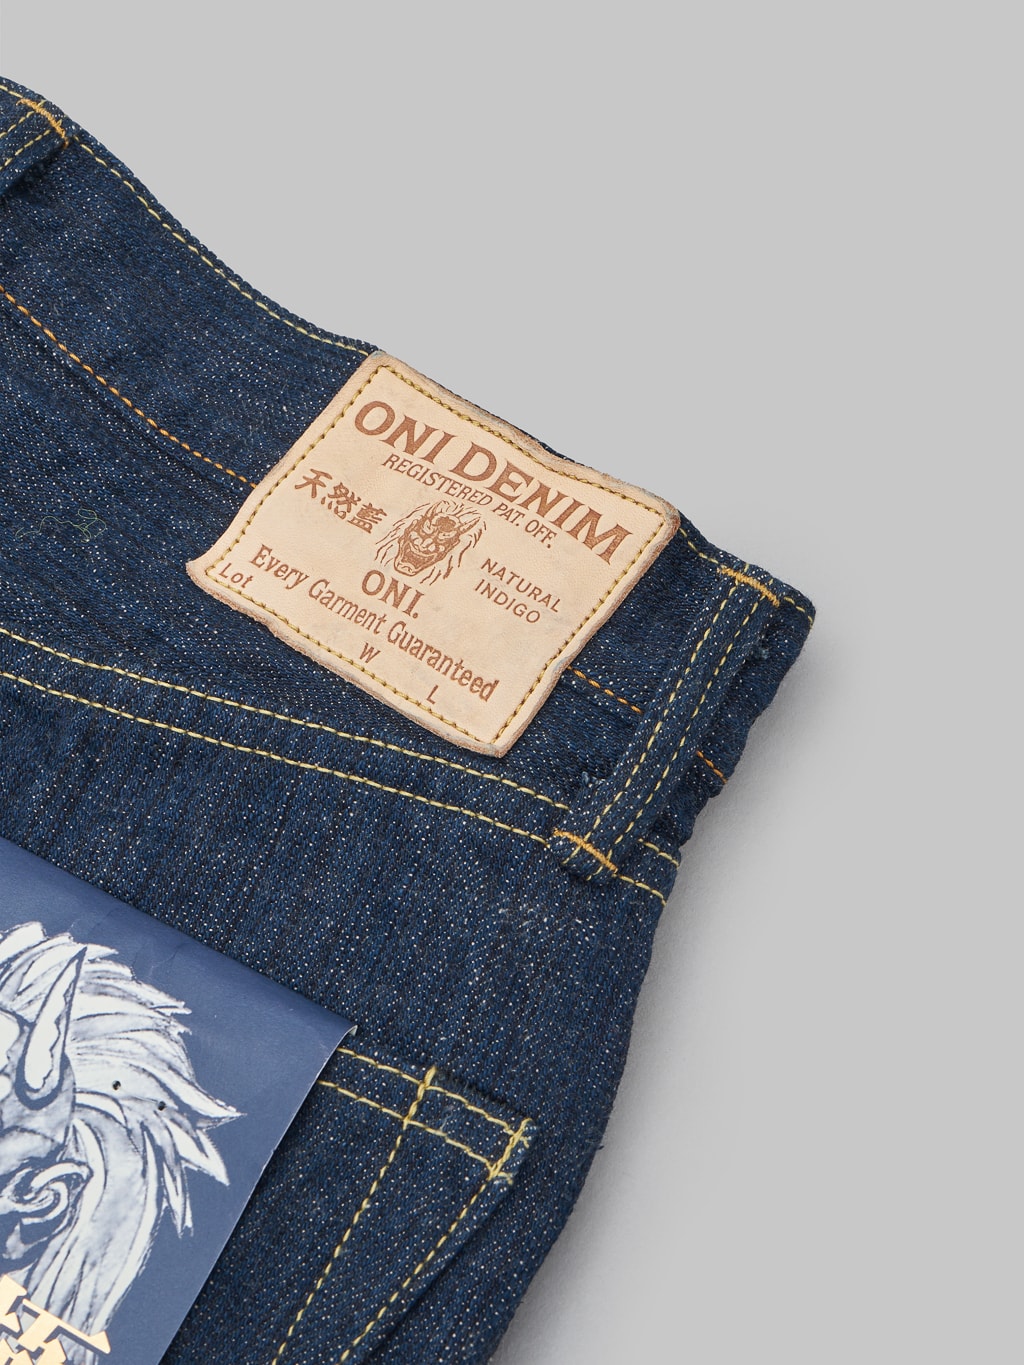 Oni denim kiwami indigo regular selvedge jeans brand leather patch